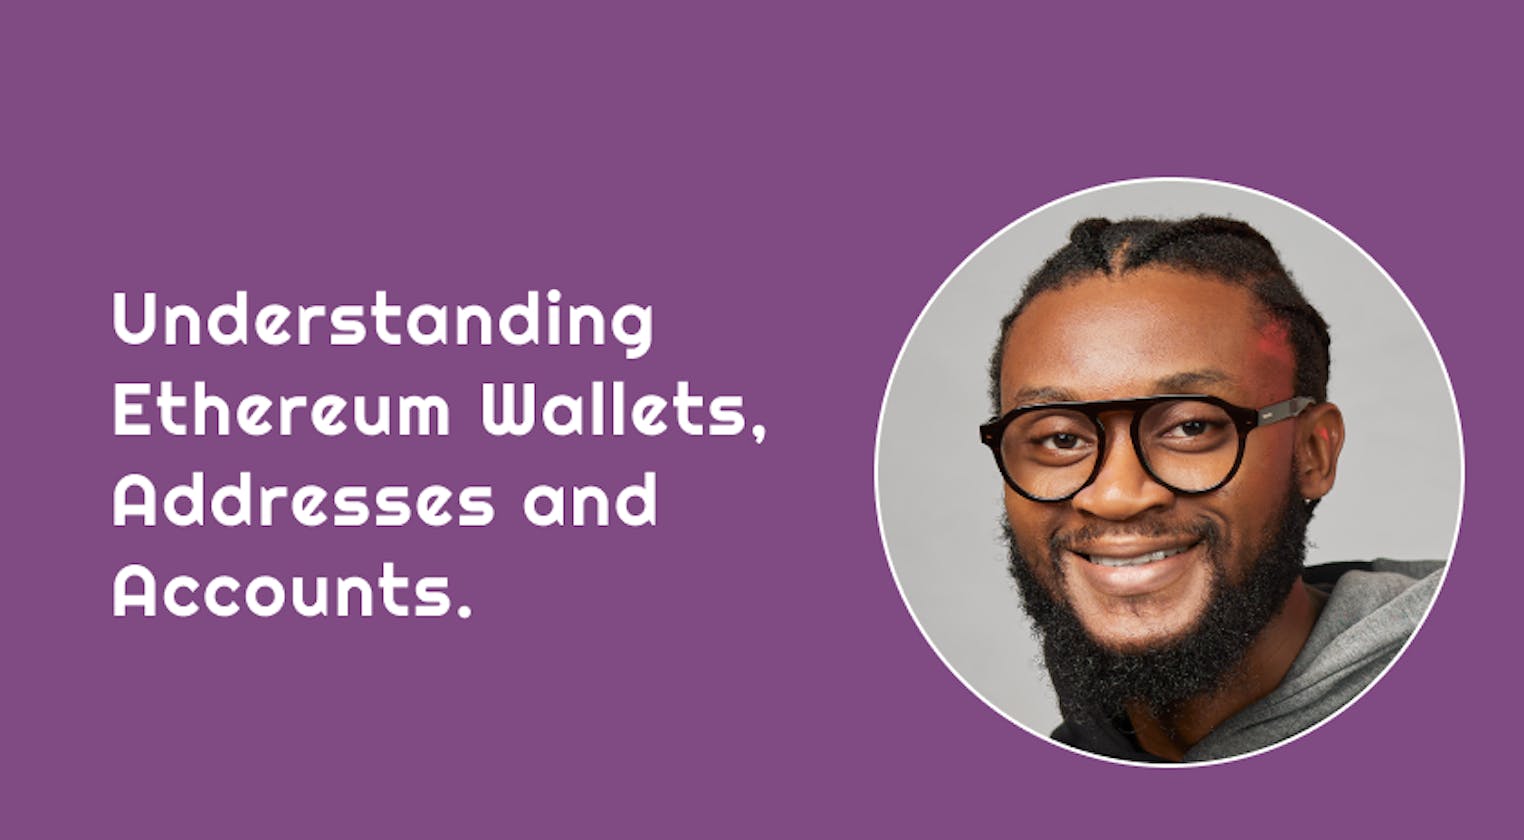 Understanding Ethereum Wallets, Addresses and Accounts.